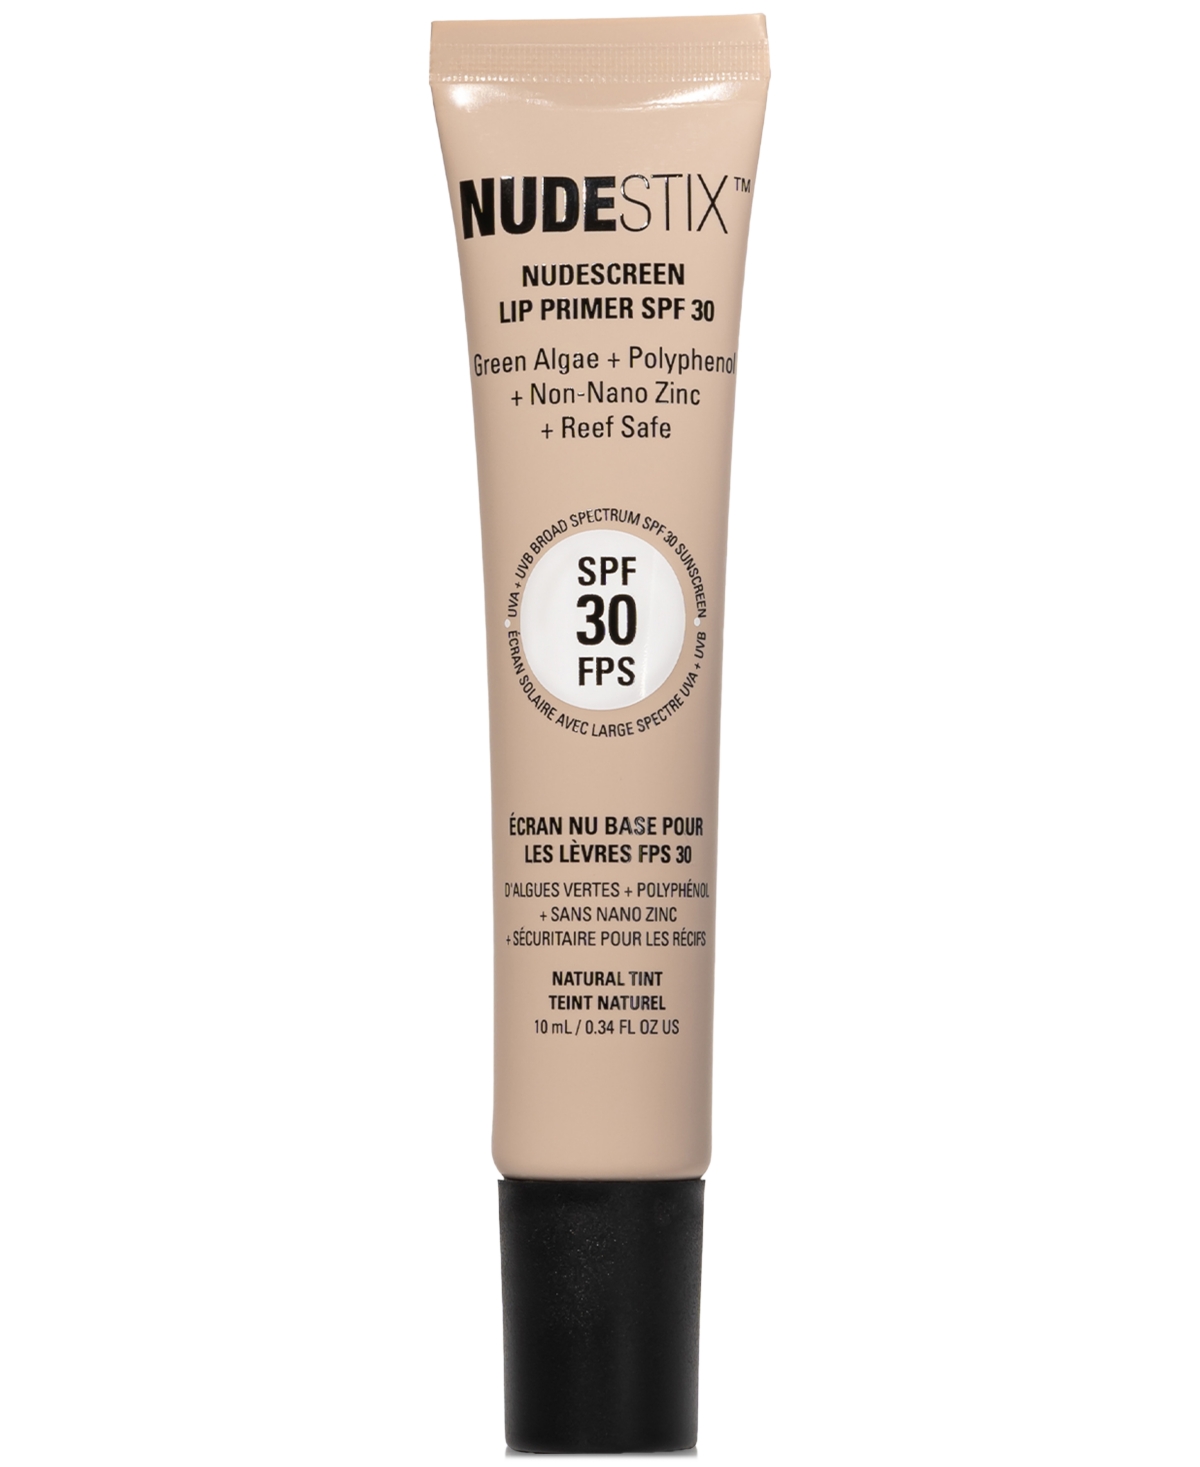 Nudestix Nudescreen Lip Primer Spf 30 In Natural